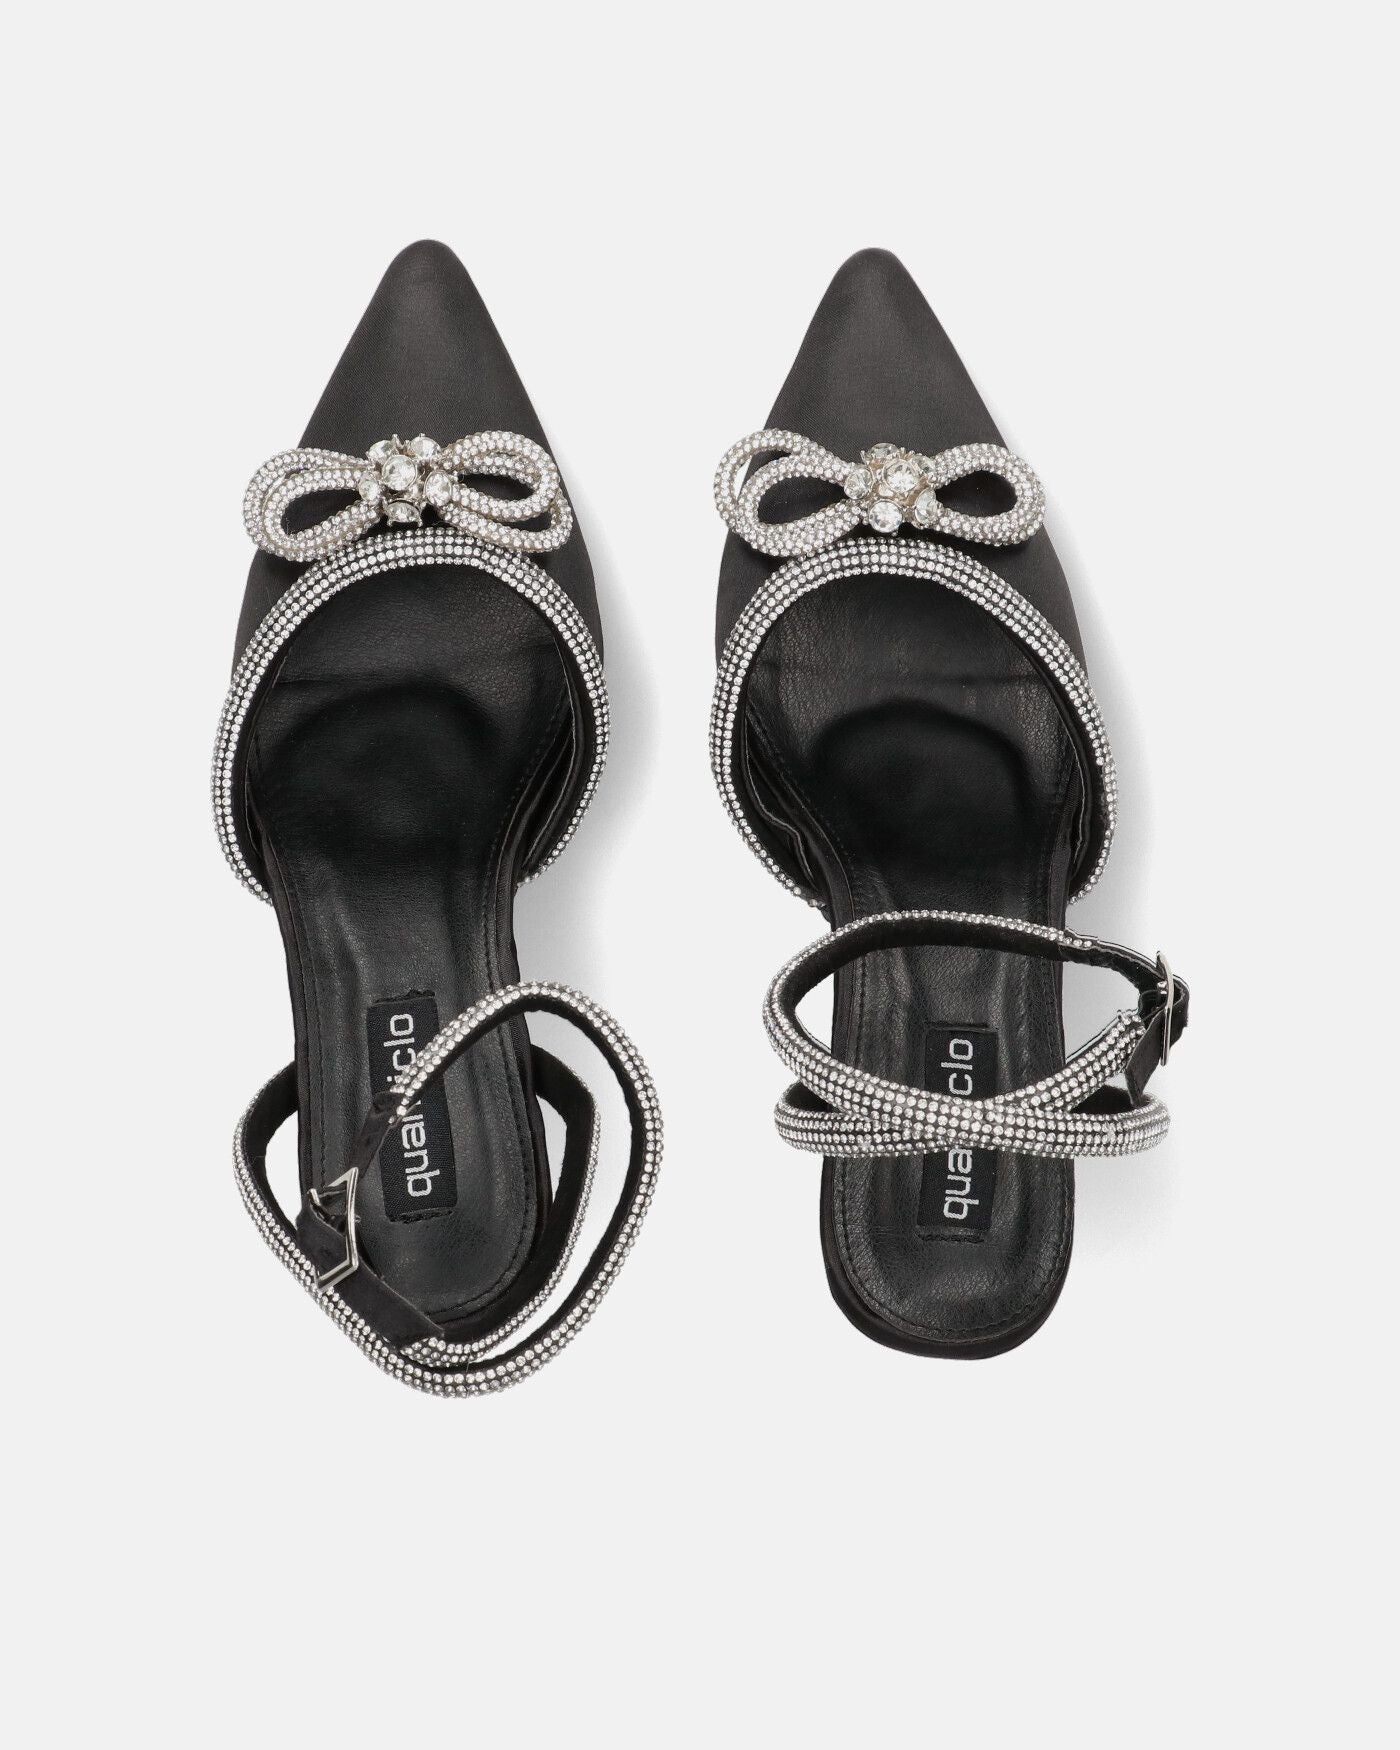 MARETA - black heeled shoes with glitter bow